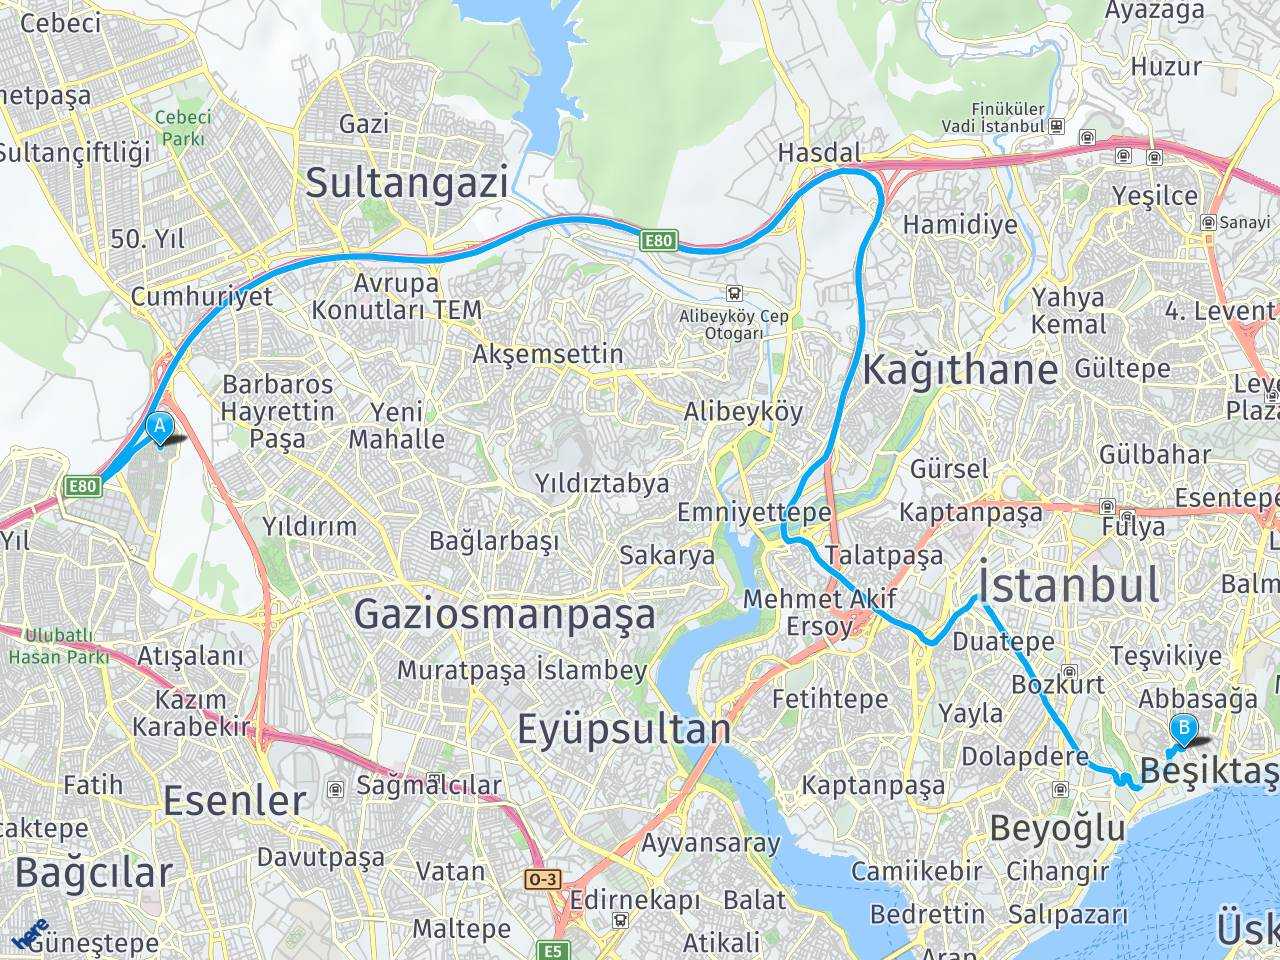 besiktas istanbul vadi istanbul arasi mesafe besiktas istanbul vadi istanbul yol haritasi besiktas istanbul vadi istanbul kac saat kac km